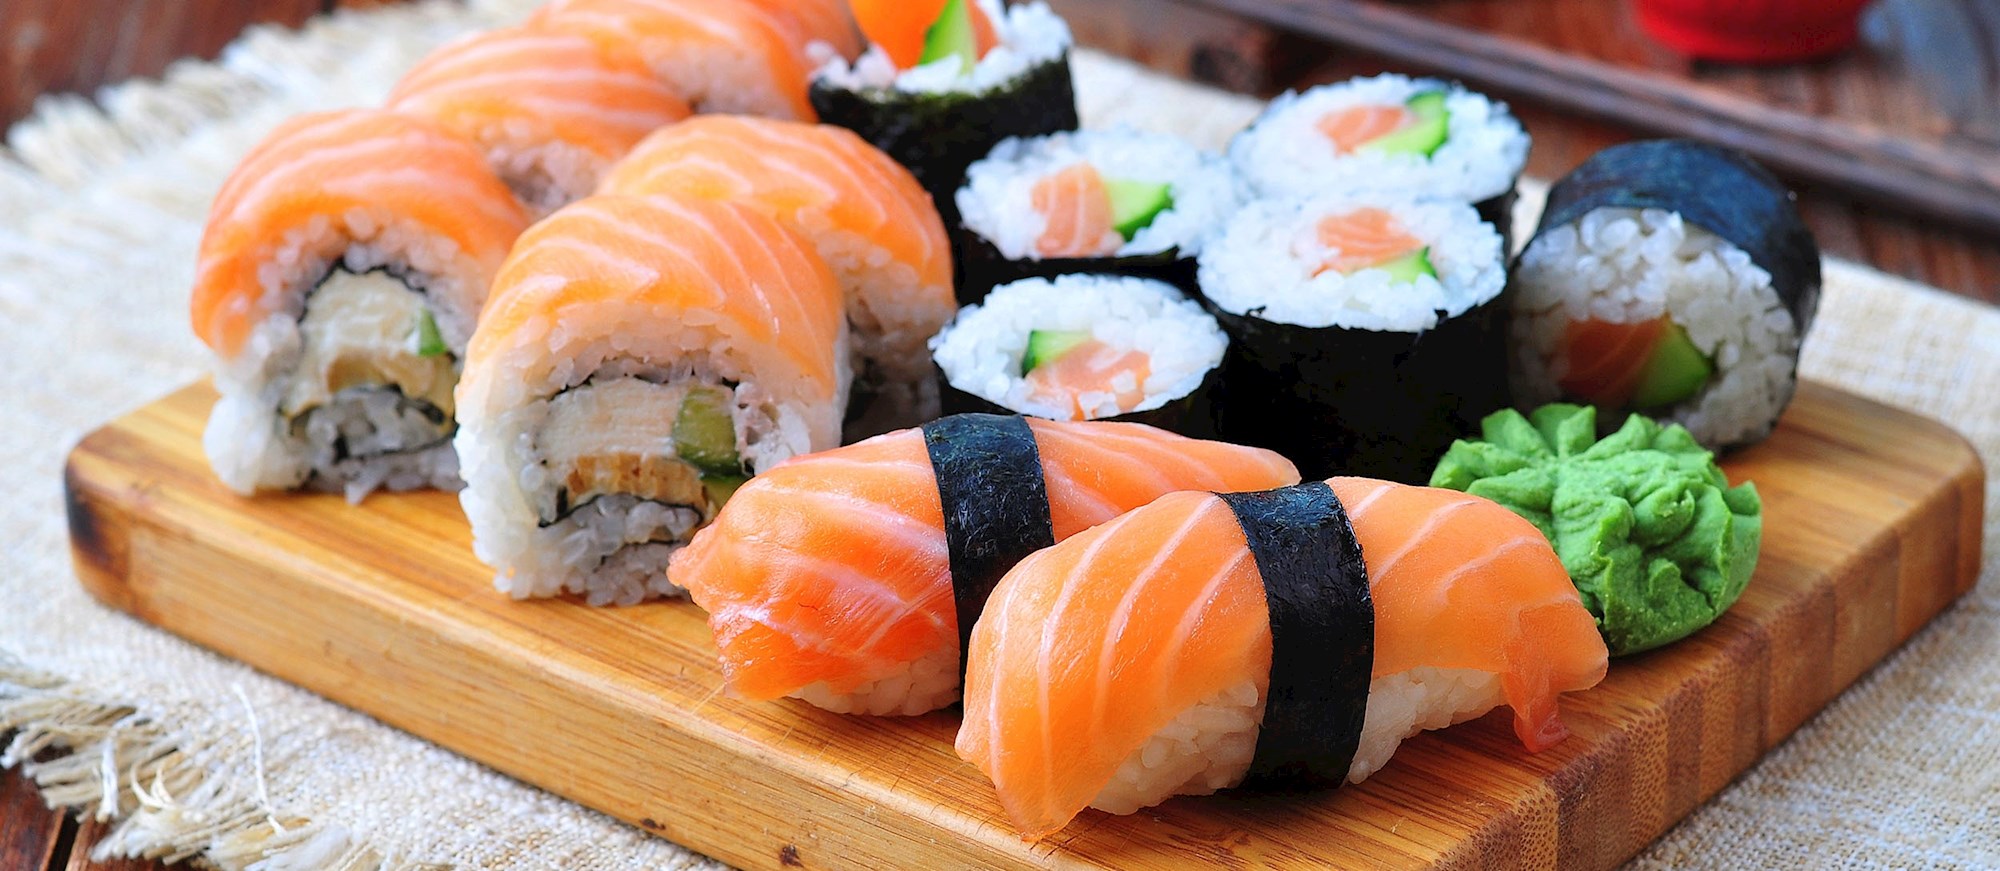 Where to Eat the Best Sushi in Illinois? | TasteAtlas